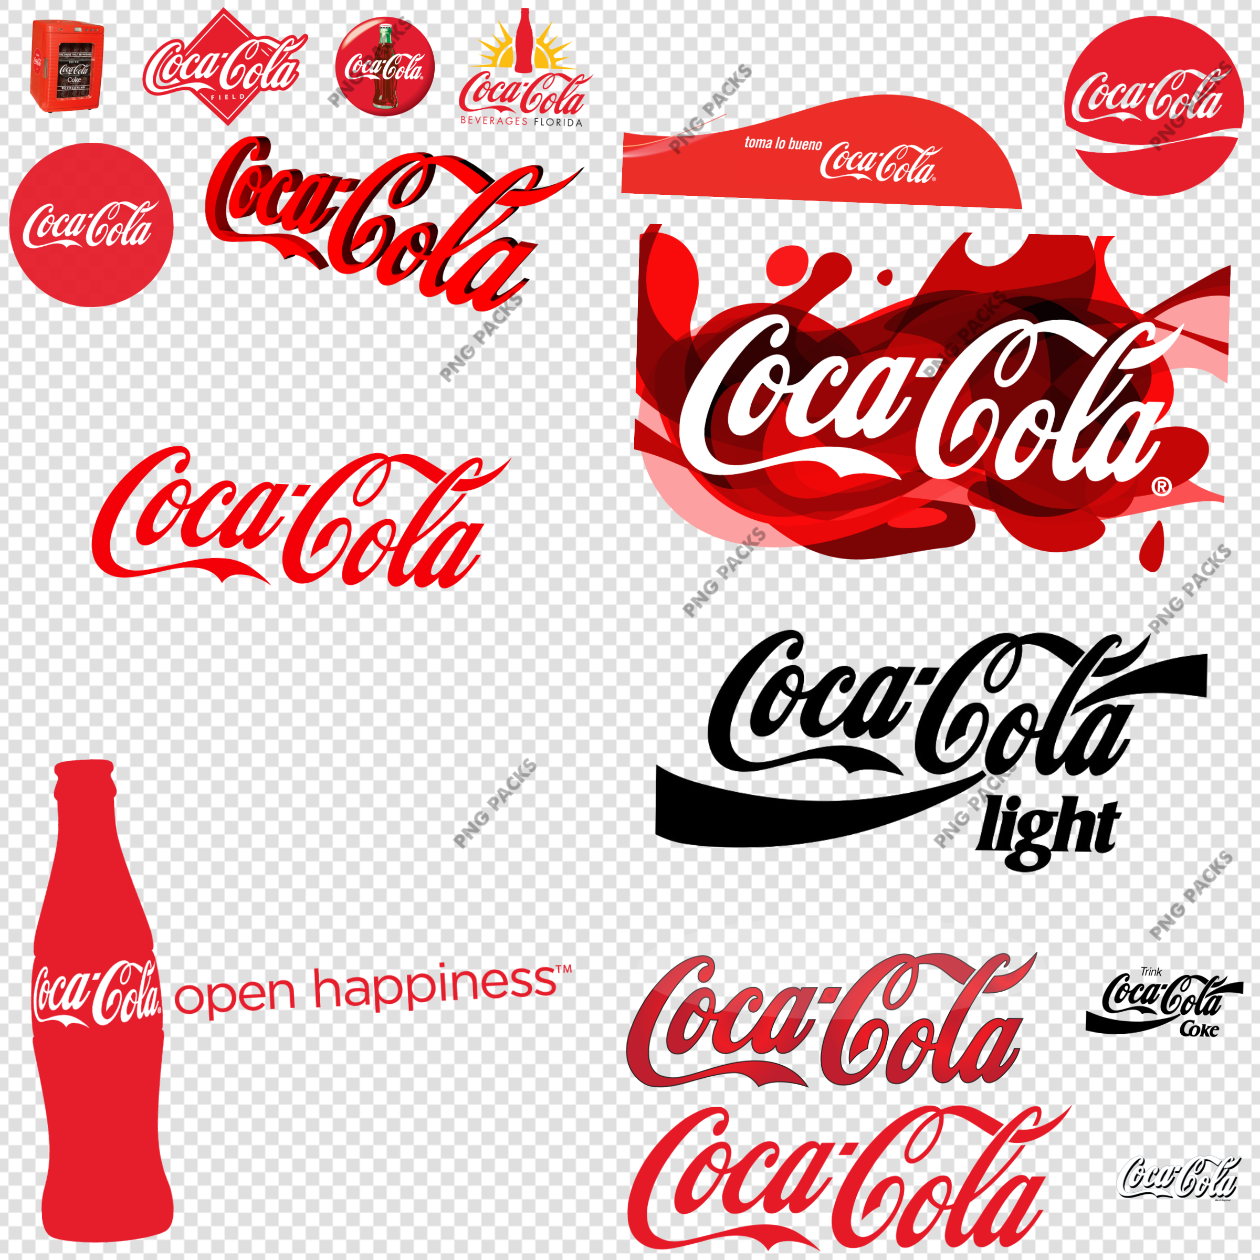 Coca Cola Logo PNG Transparent Images Download - PNG Packs